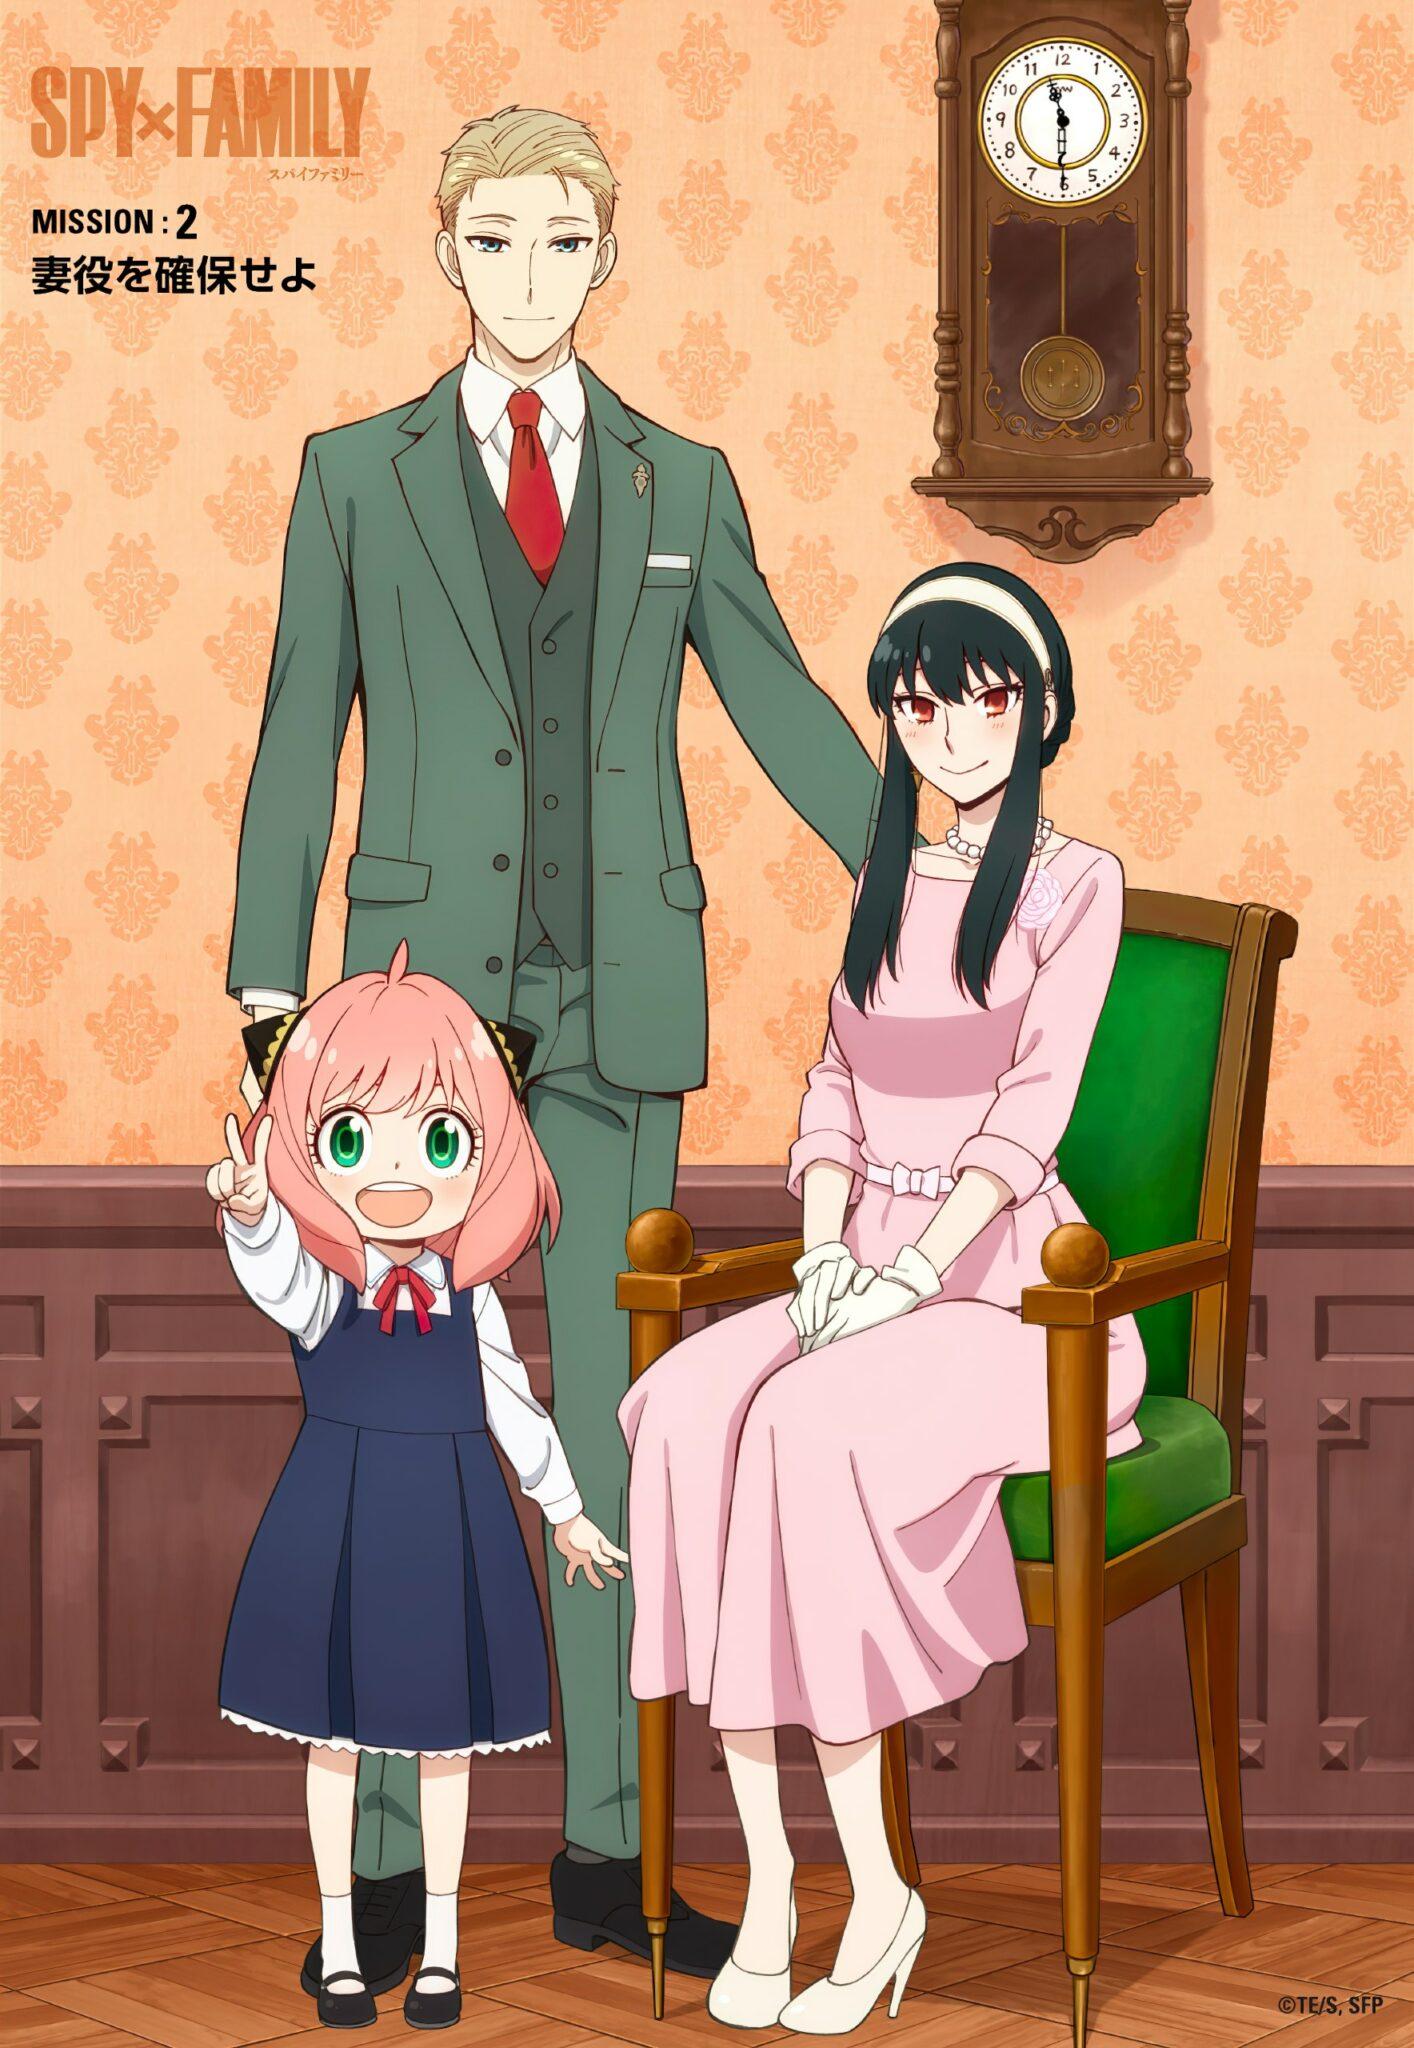 El anime SPY x FAMILY celebra la emisión de su episodio #2